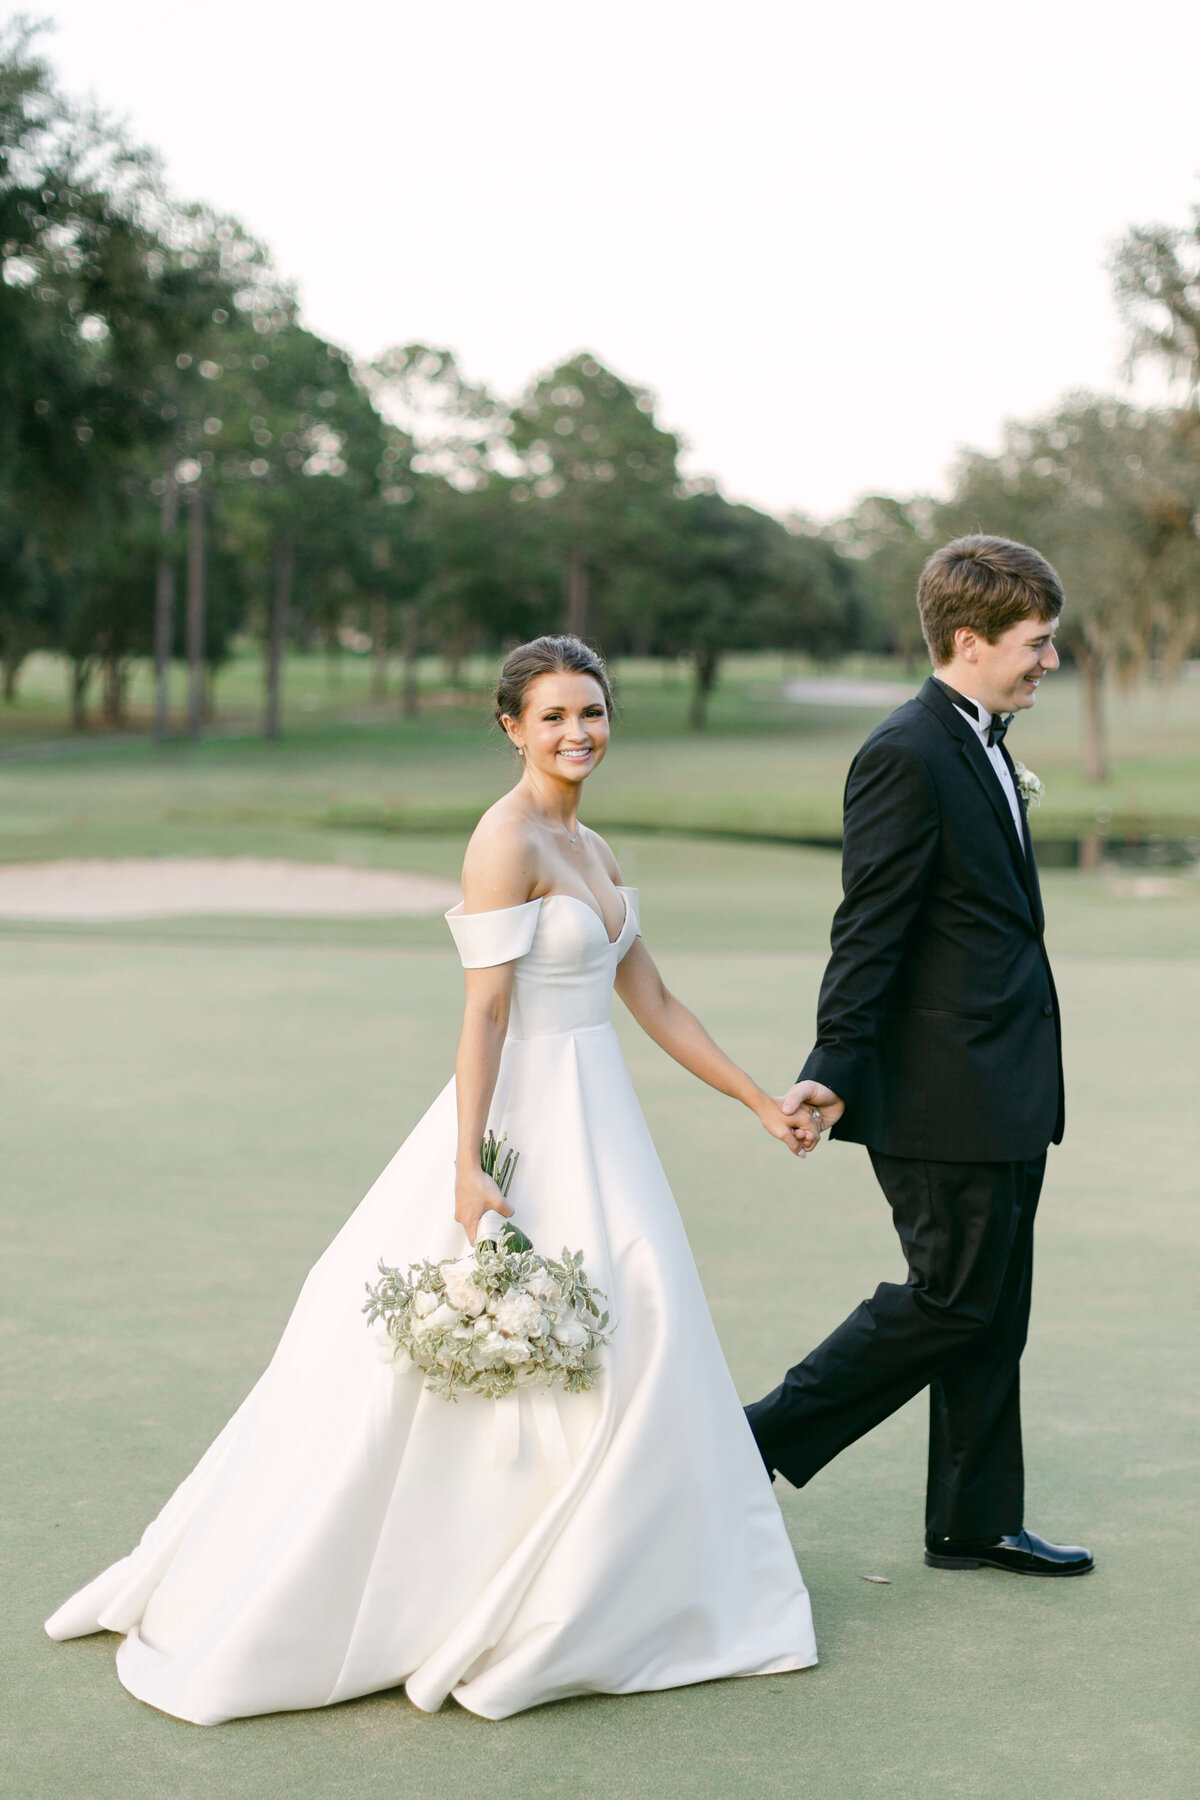 A bride and groom walk along a golf course.